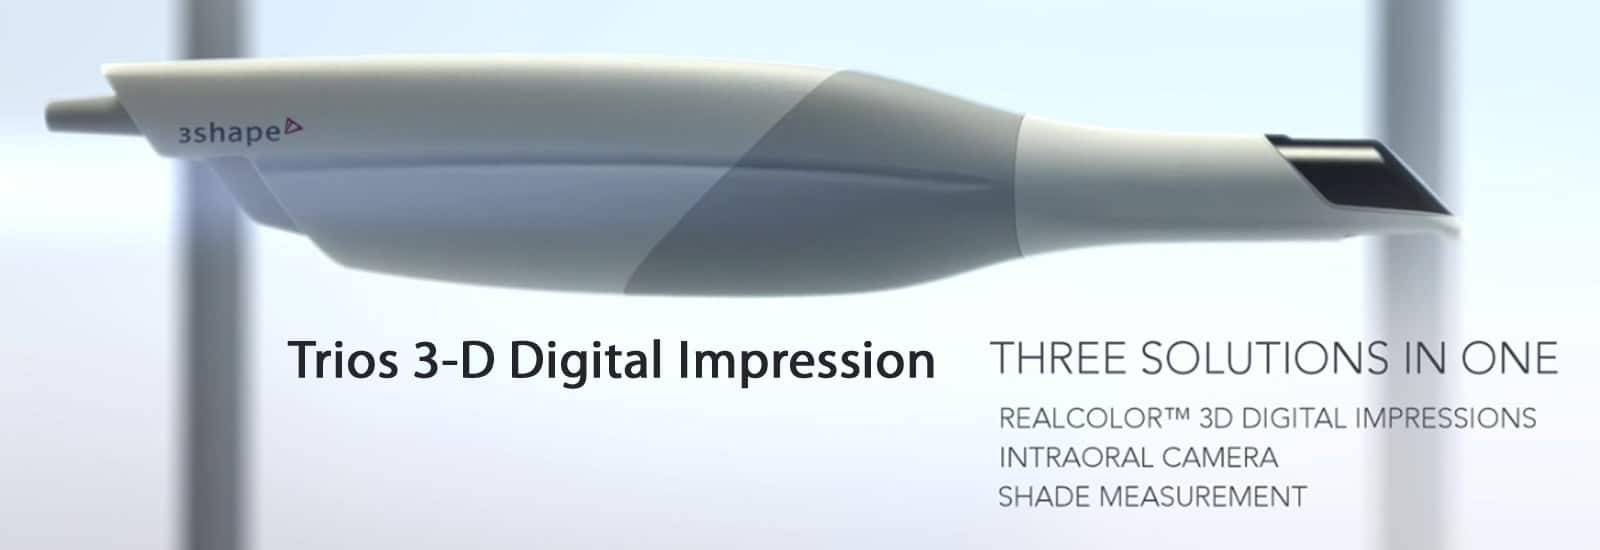 Trios-3-D-Digital-Impression